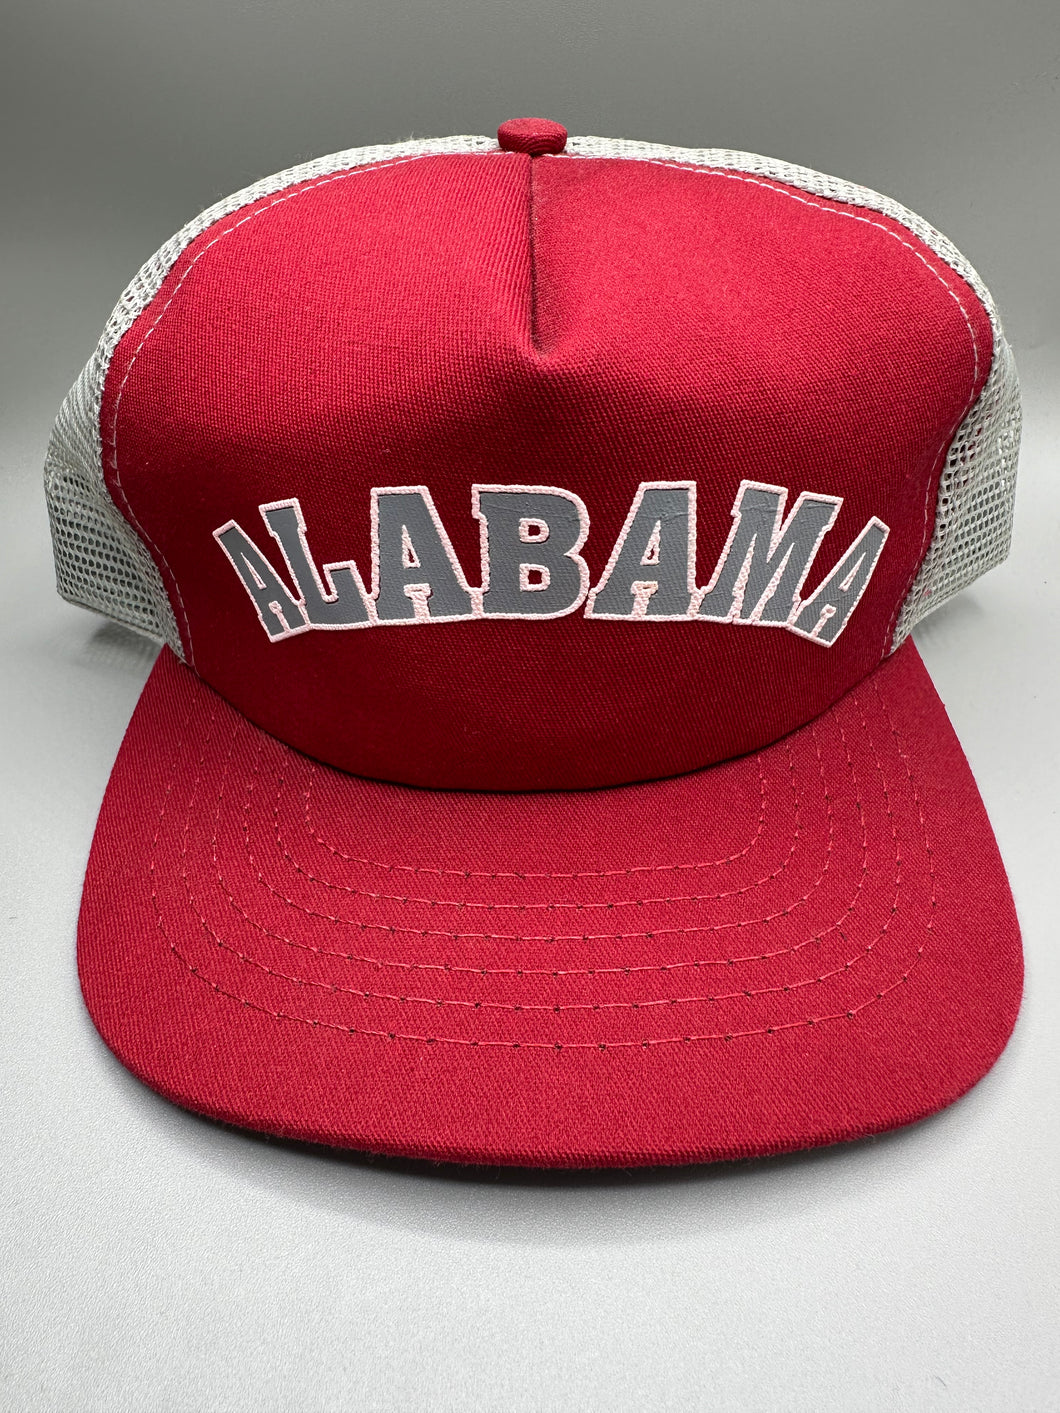 Vintage Alabama Spellout Trucker Snapback Hat USA